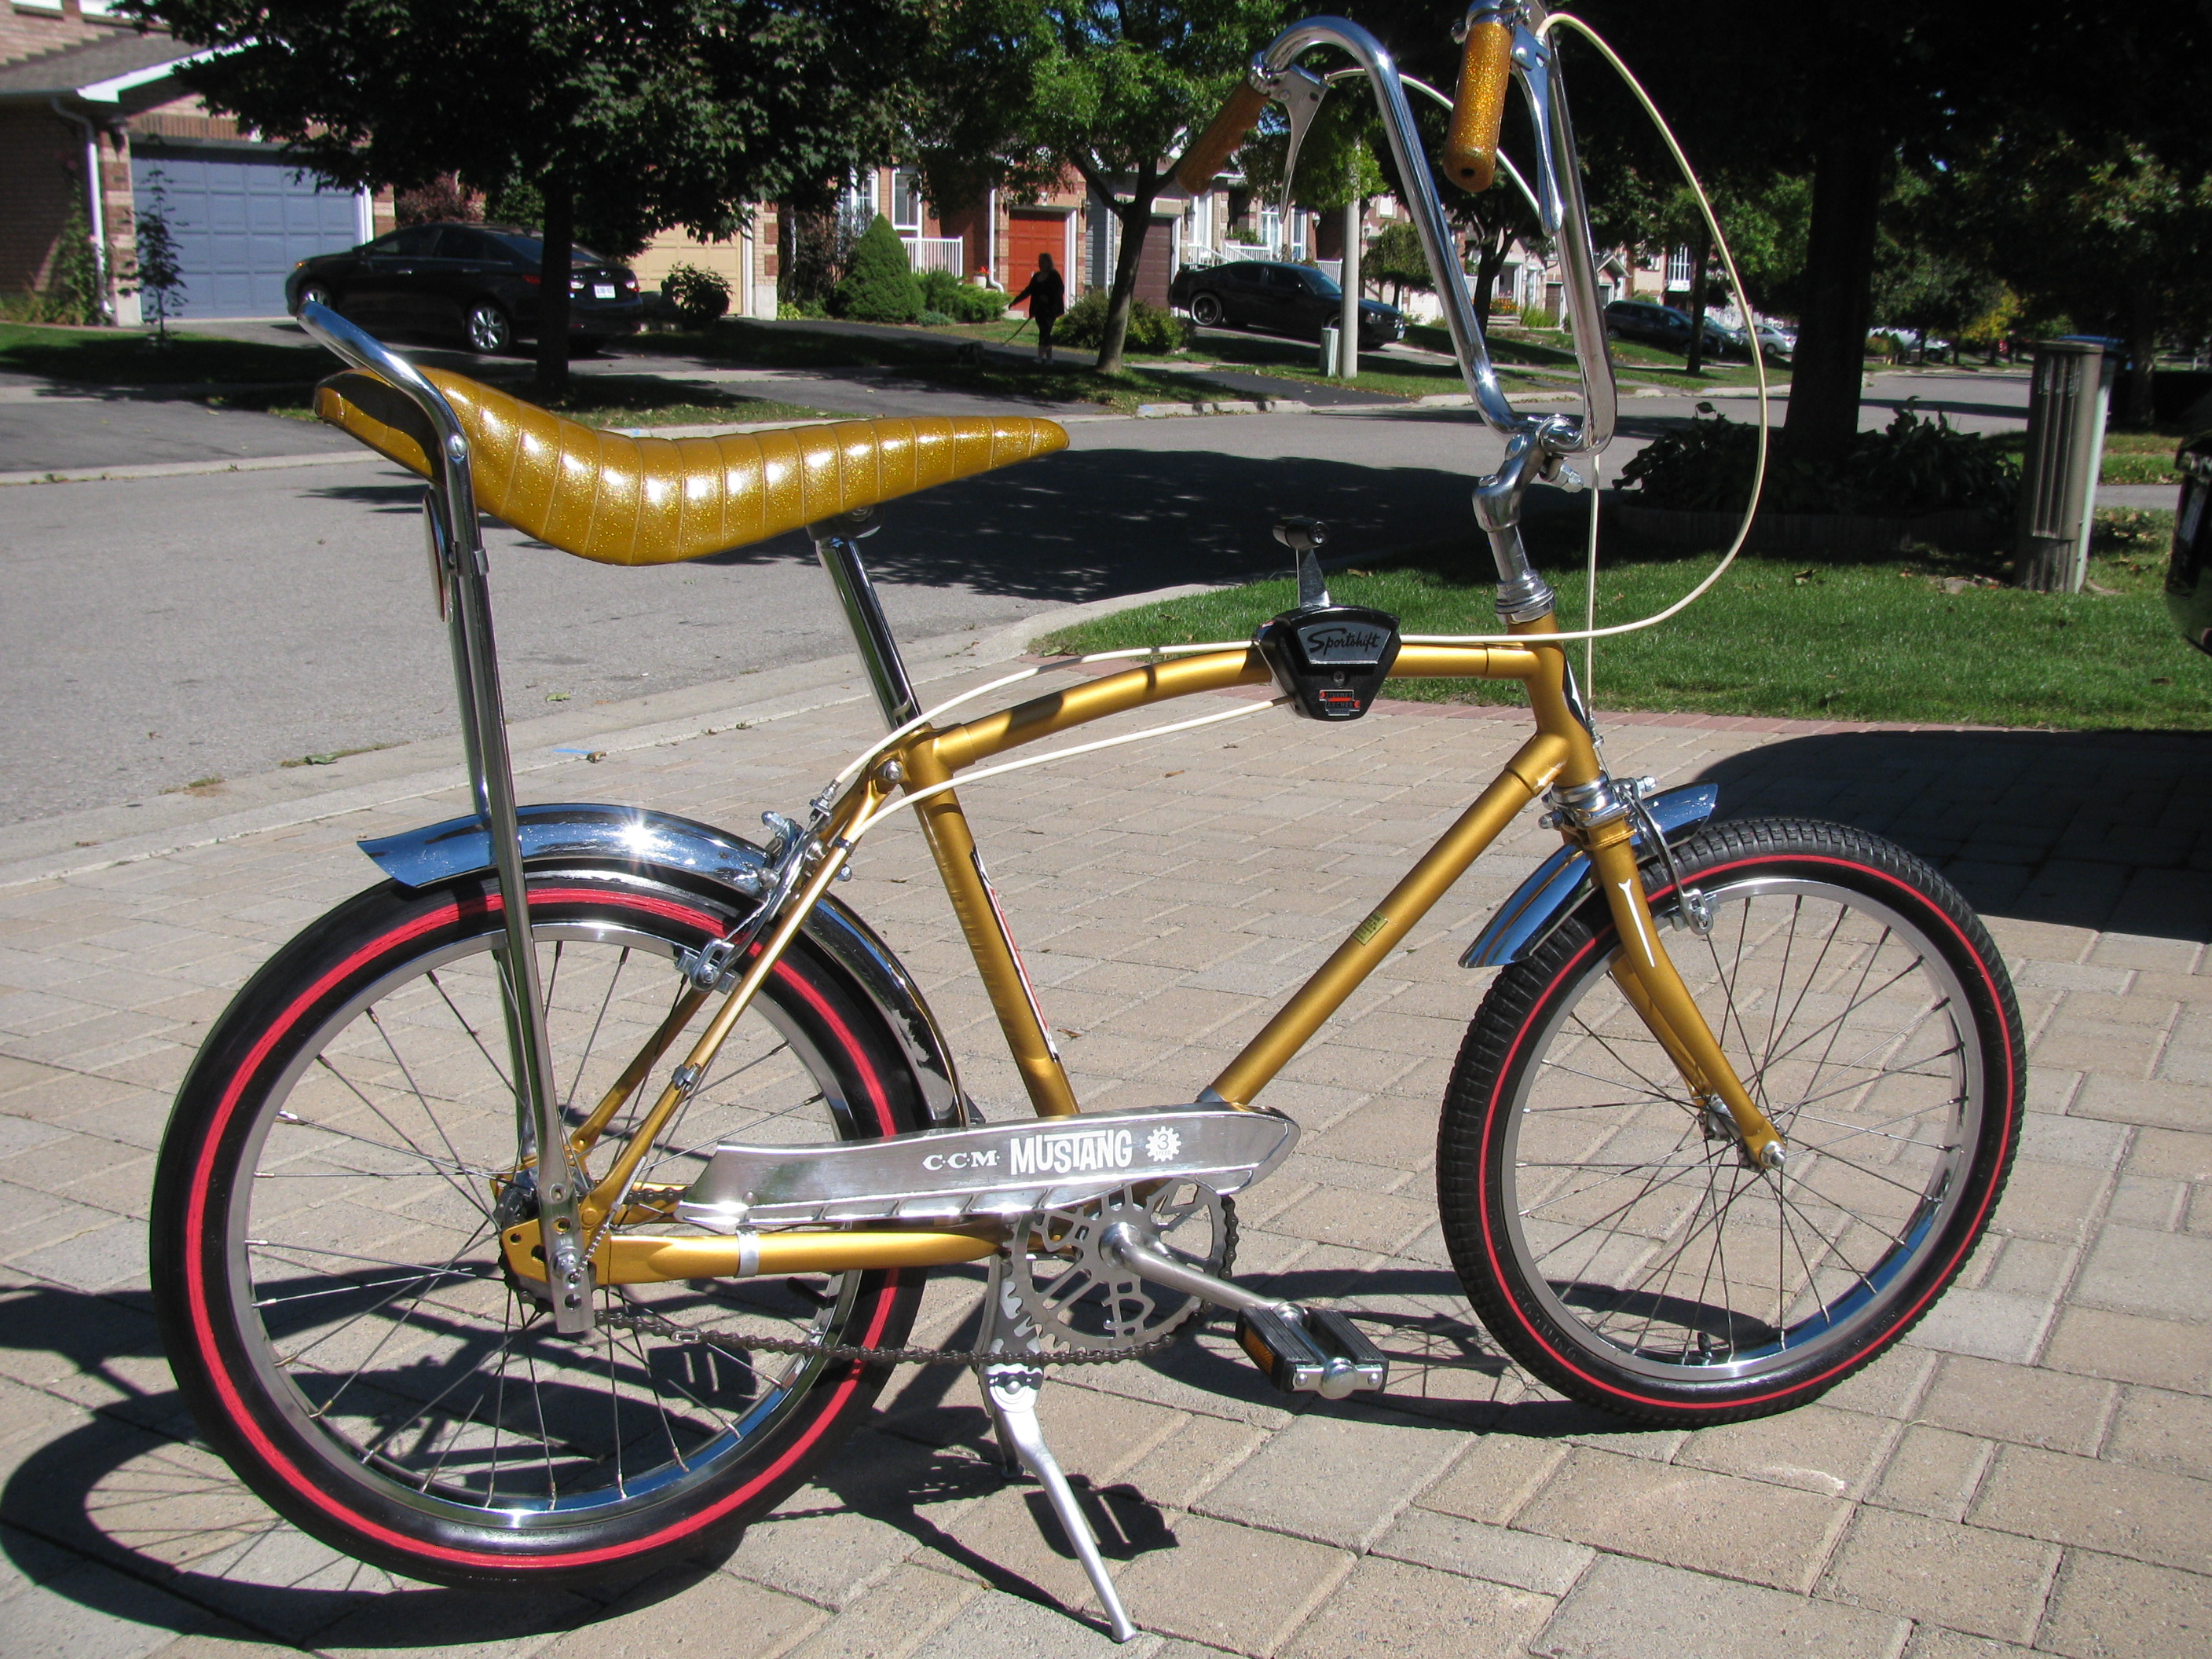 ccm bicycle models